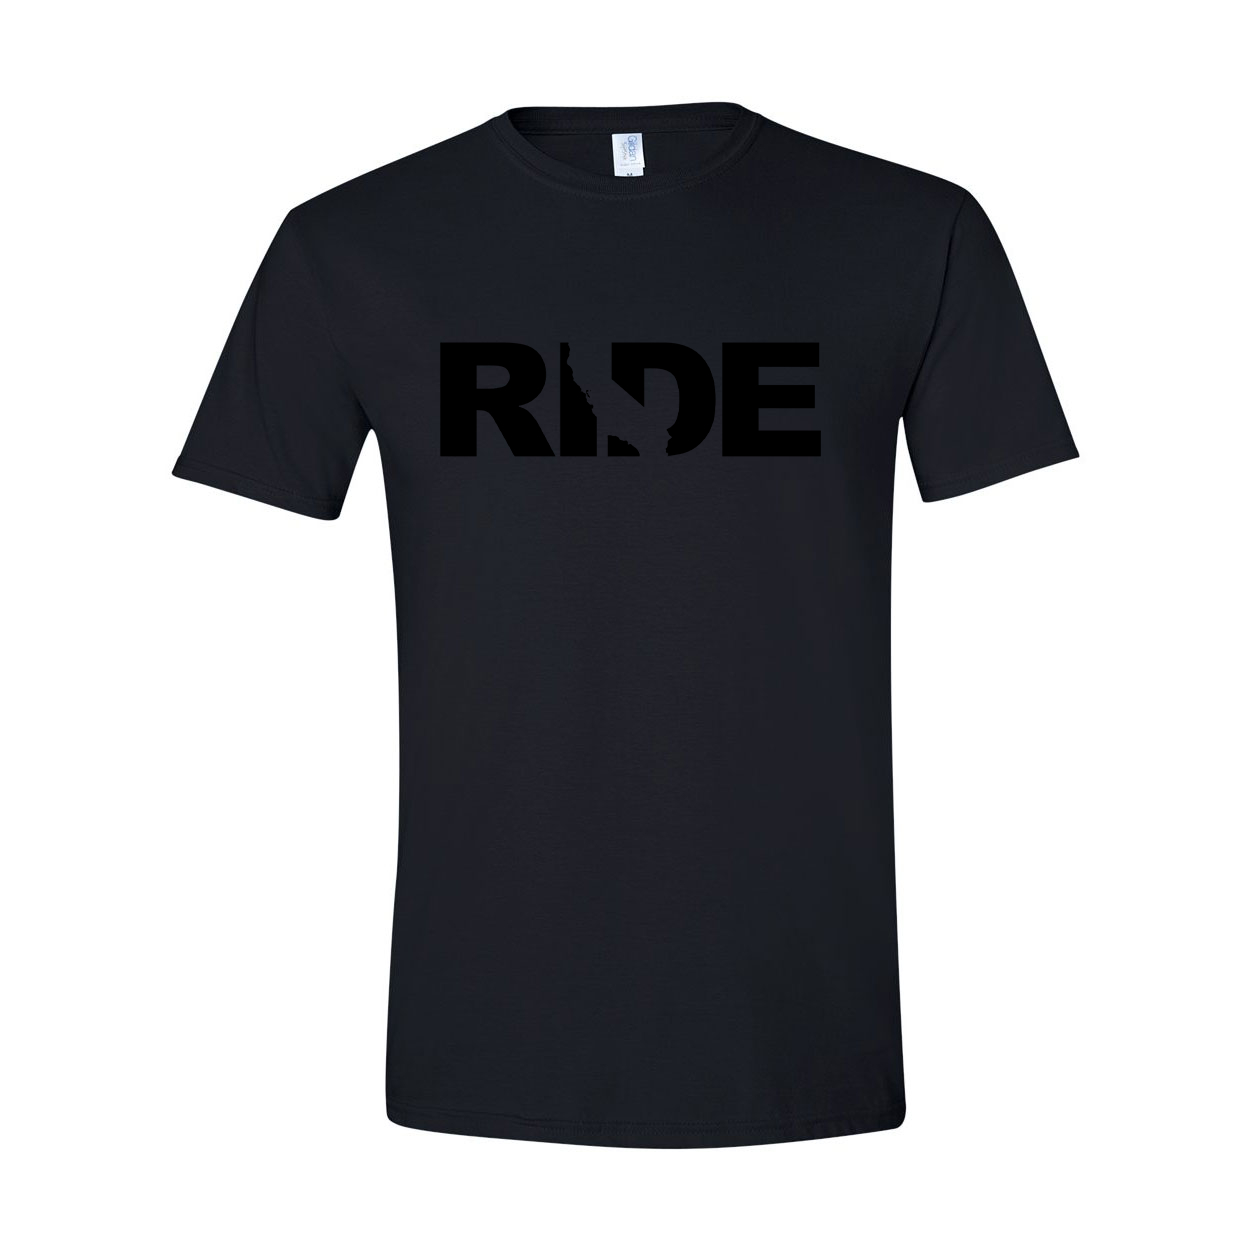 Ride California Classic T-Shirt Black (Black Logo)